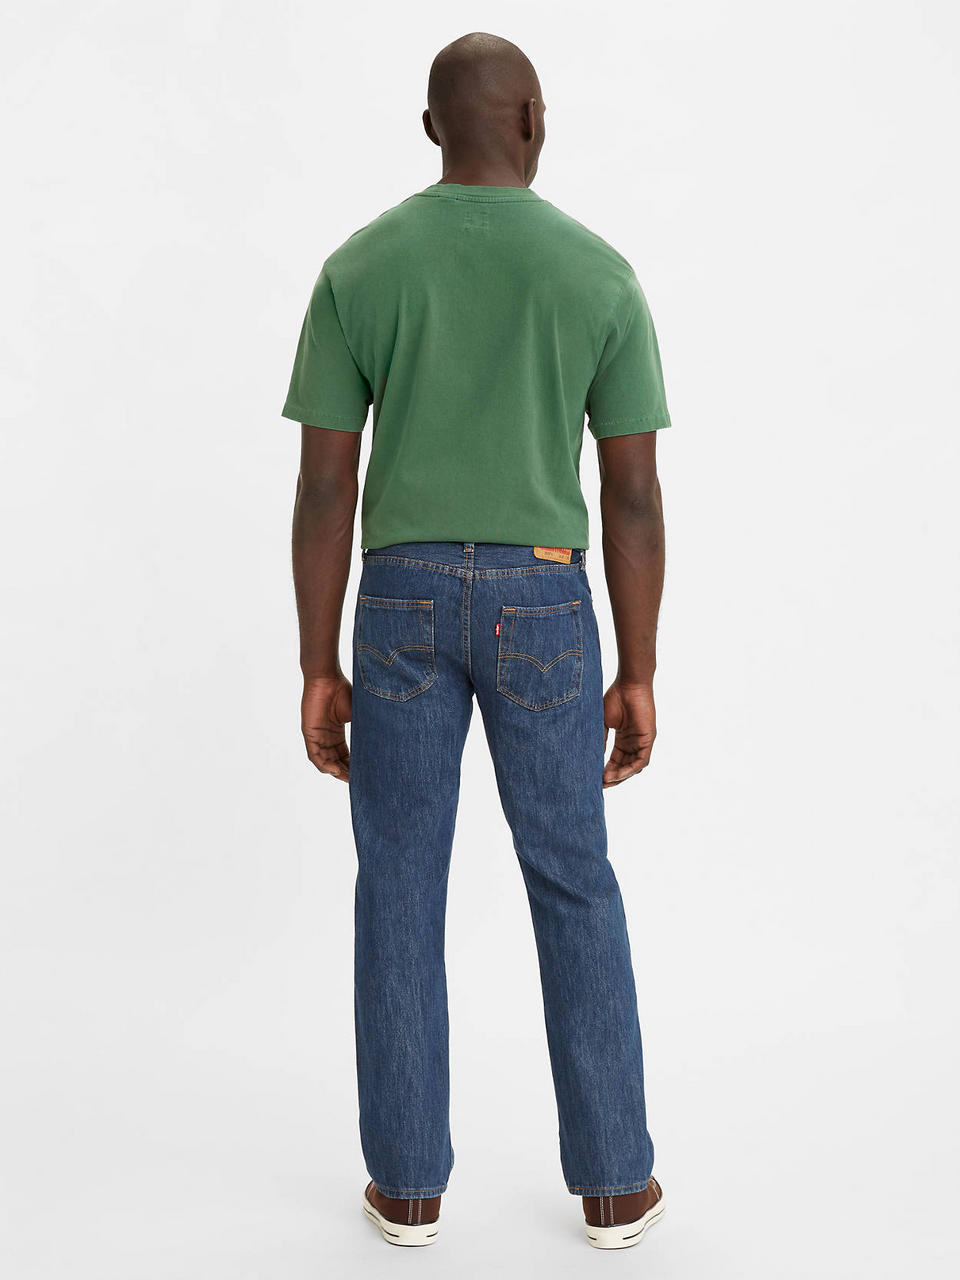 Levi's 501 Original Fit Jeans (Dark Stonewash) Men's Straight Denim